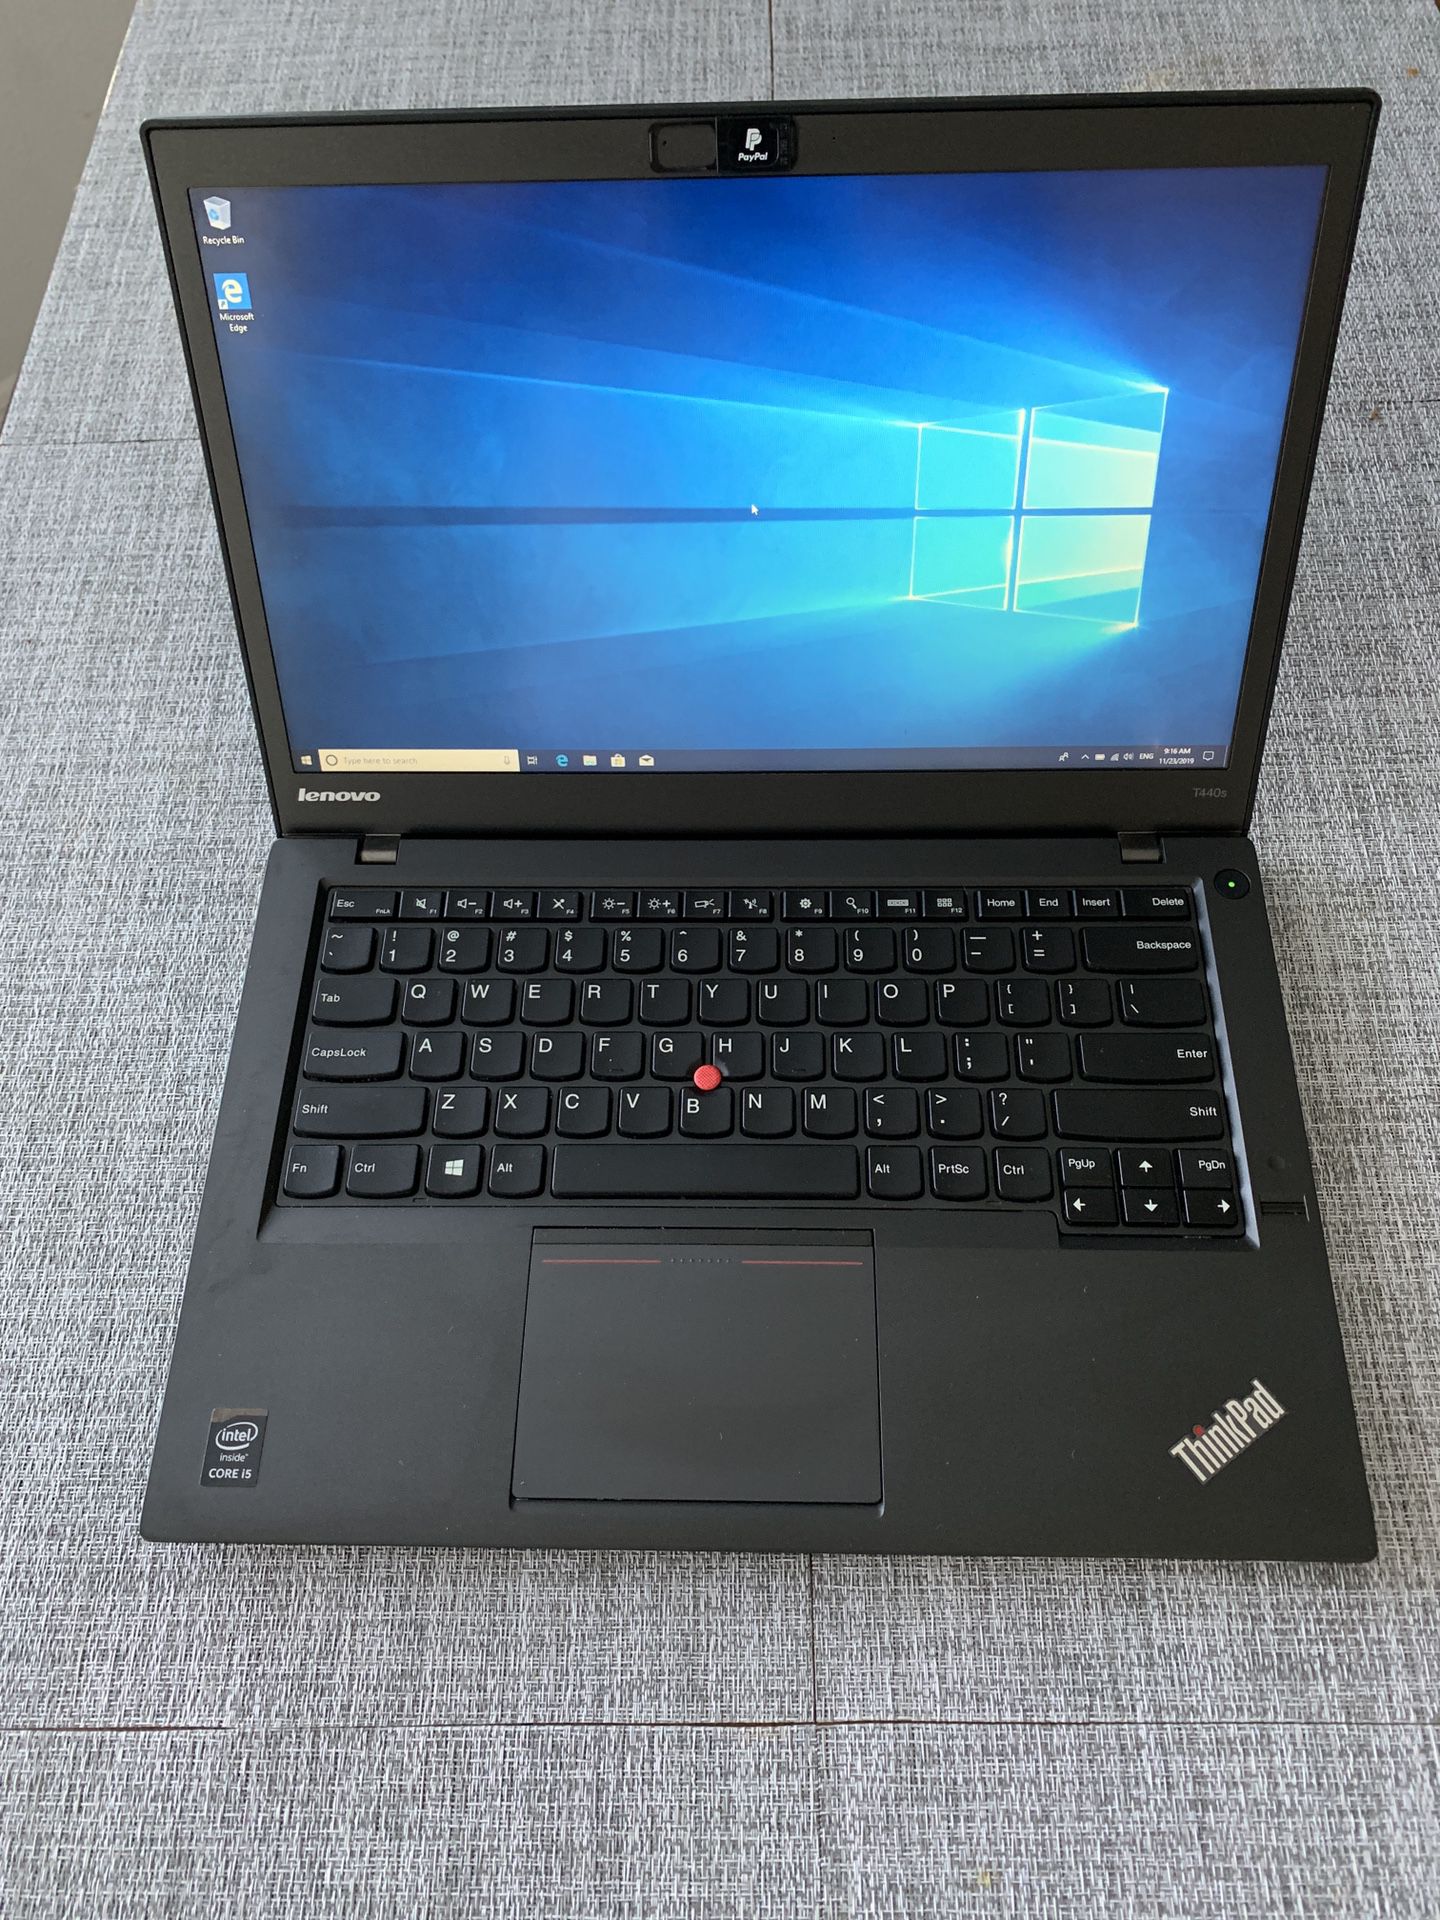 14” Lenovo T440S laptop with Docking Station - Windows 10 Pro